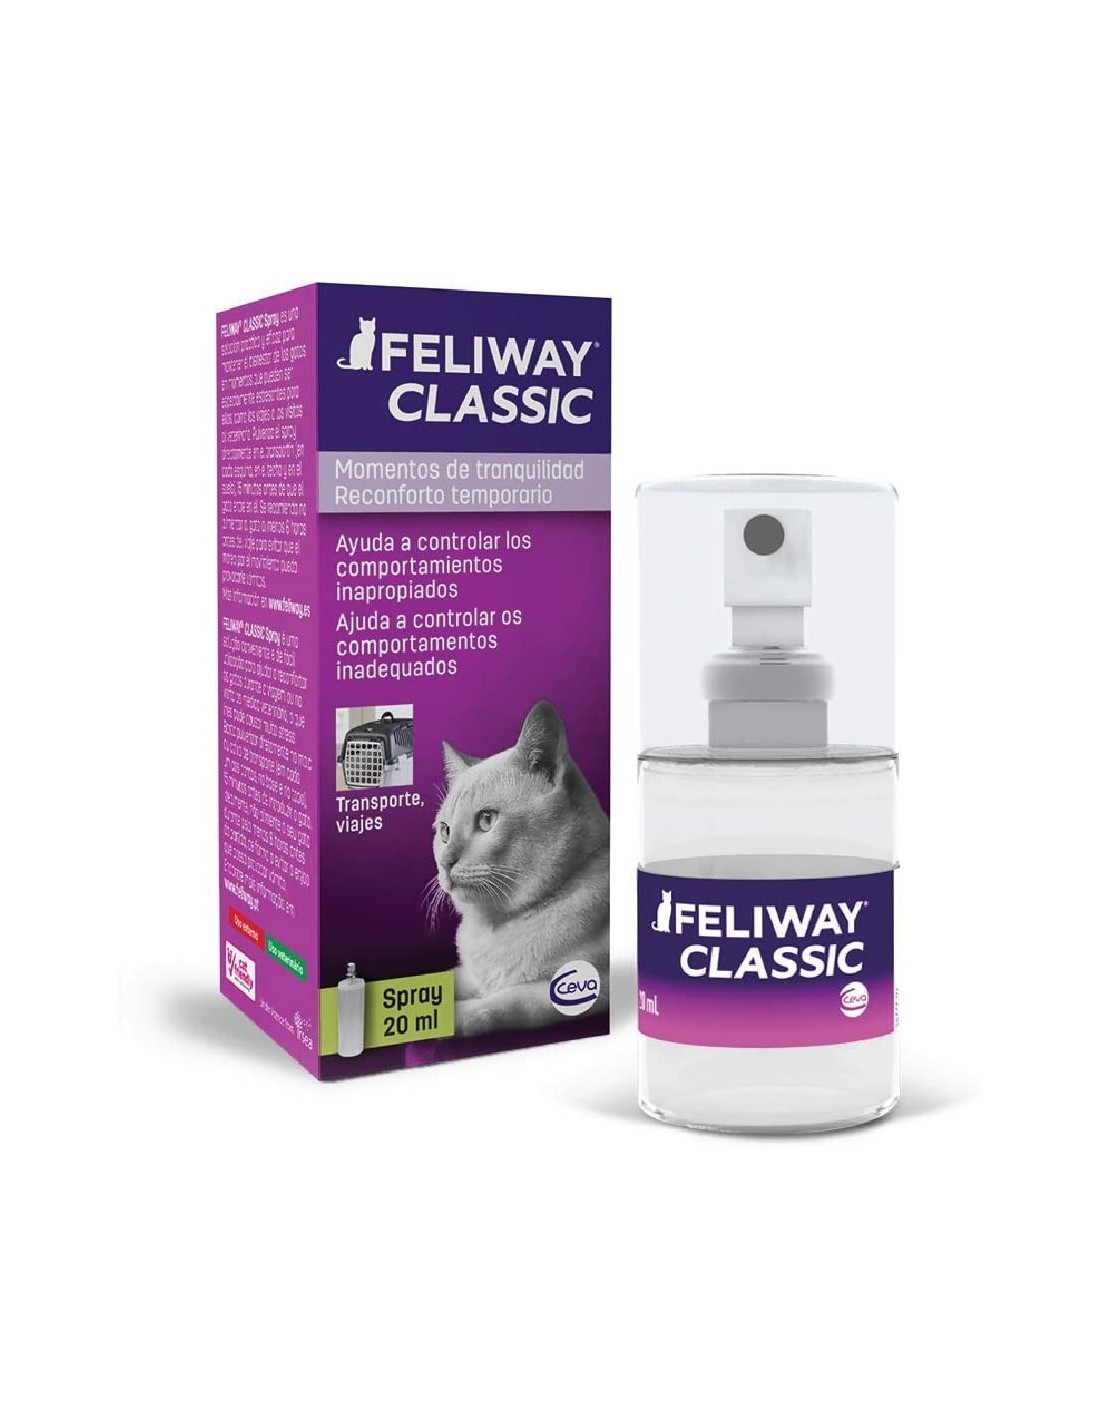 FELIWAY SPRAY 60 ml Feromona Facial antiestres para gatos